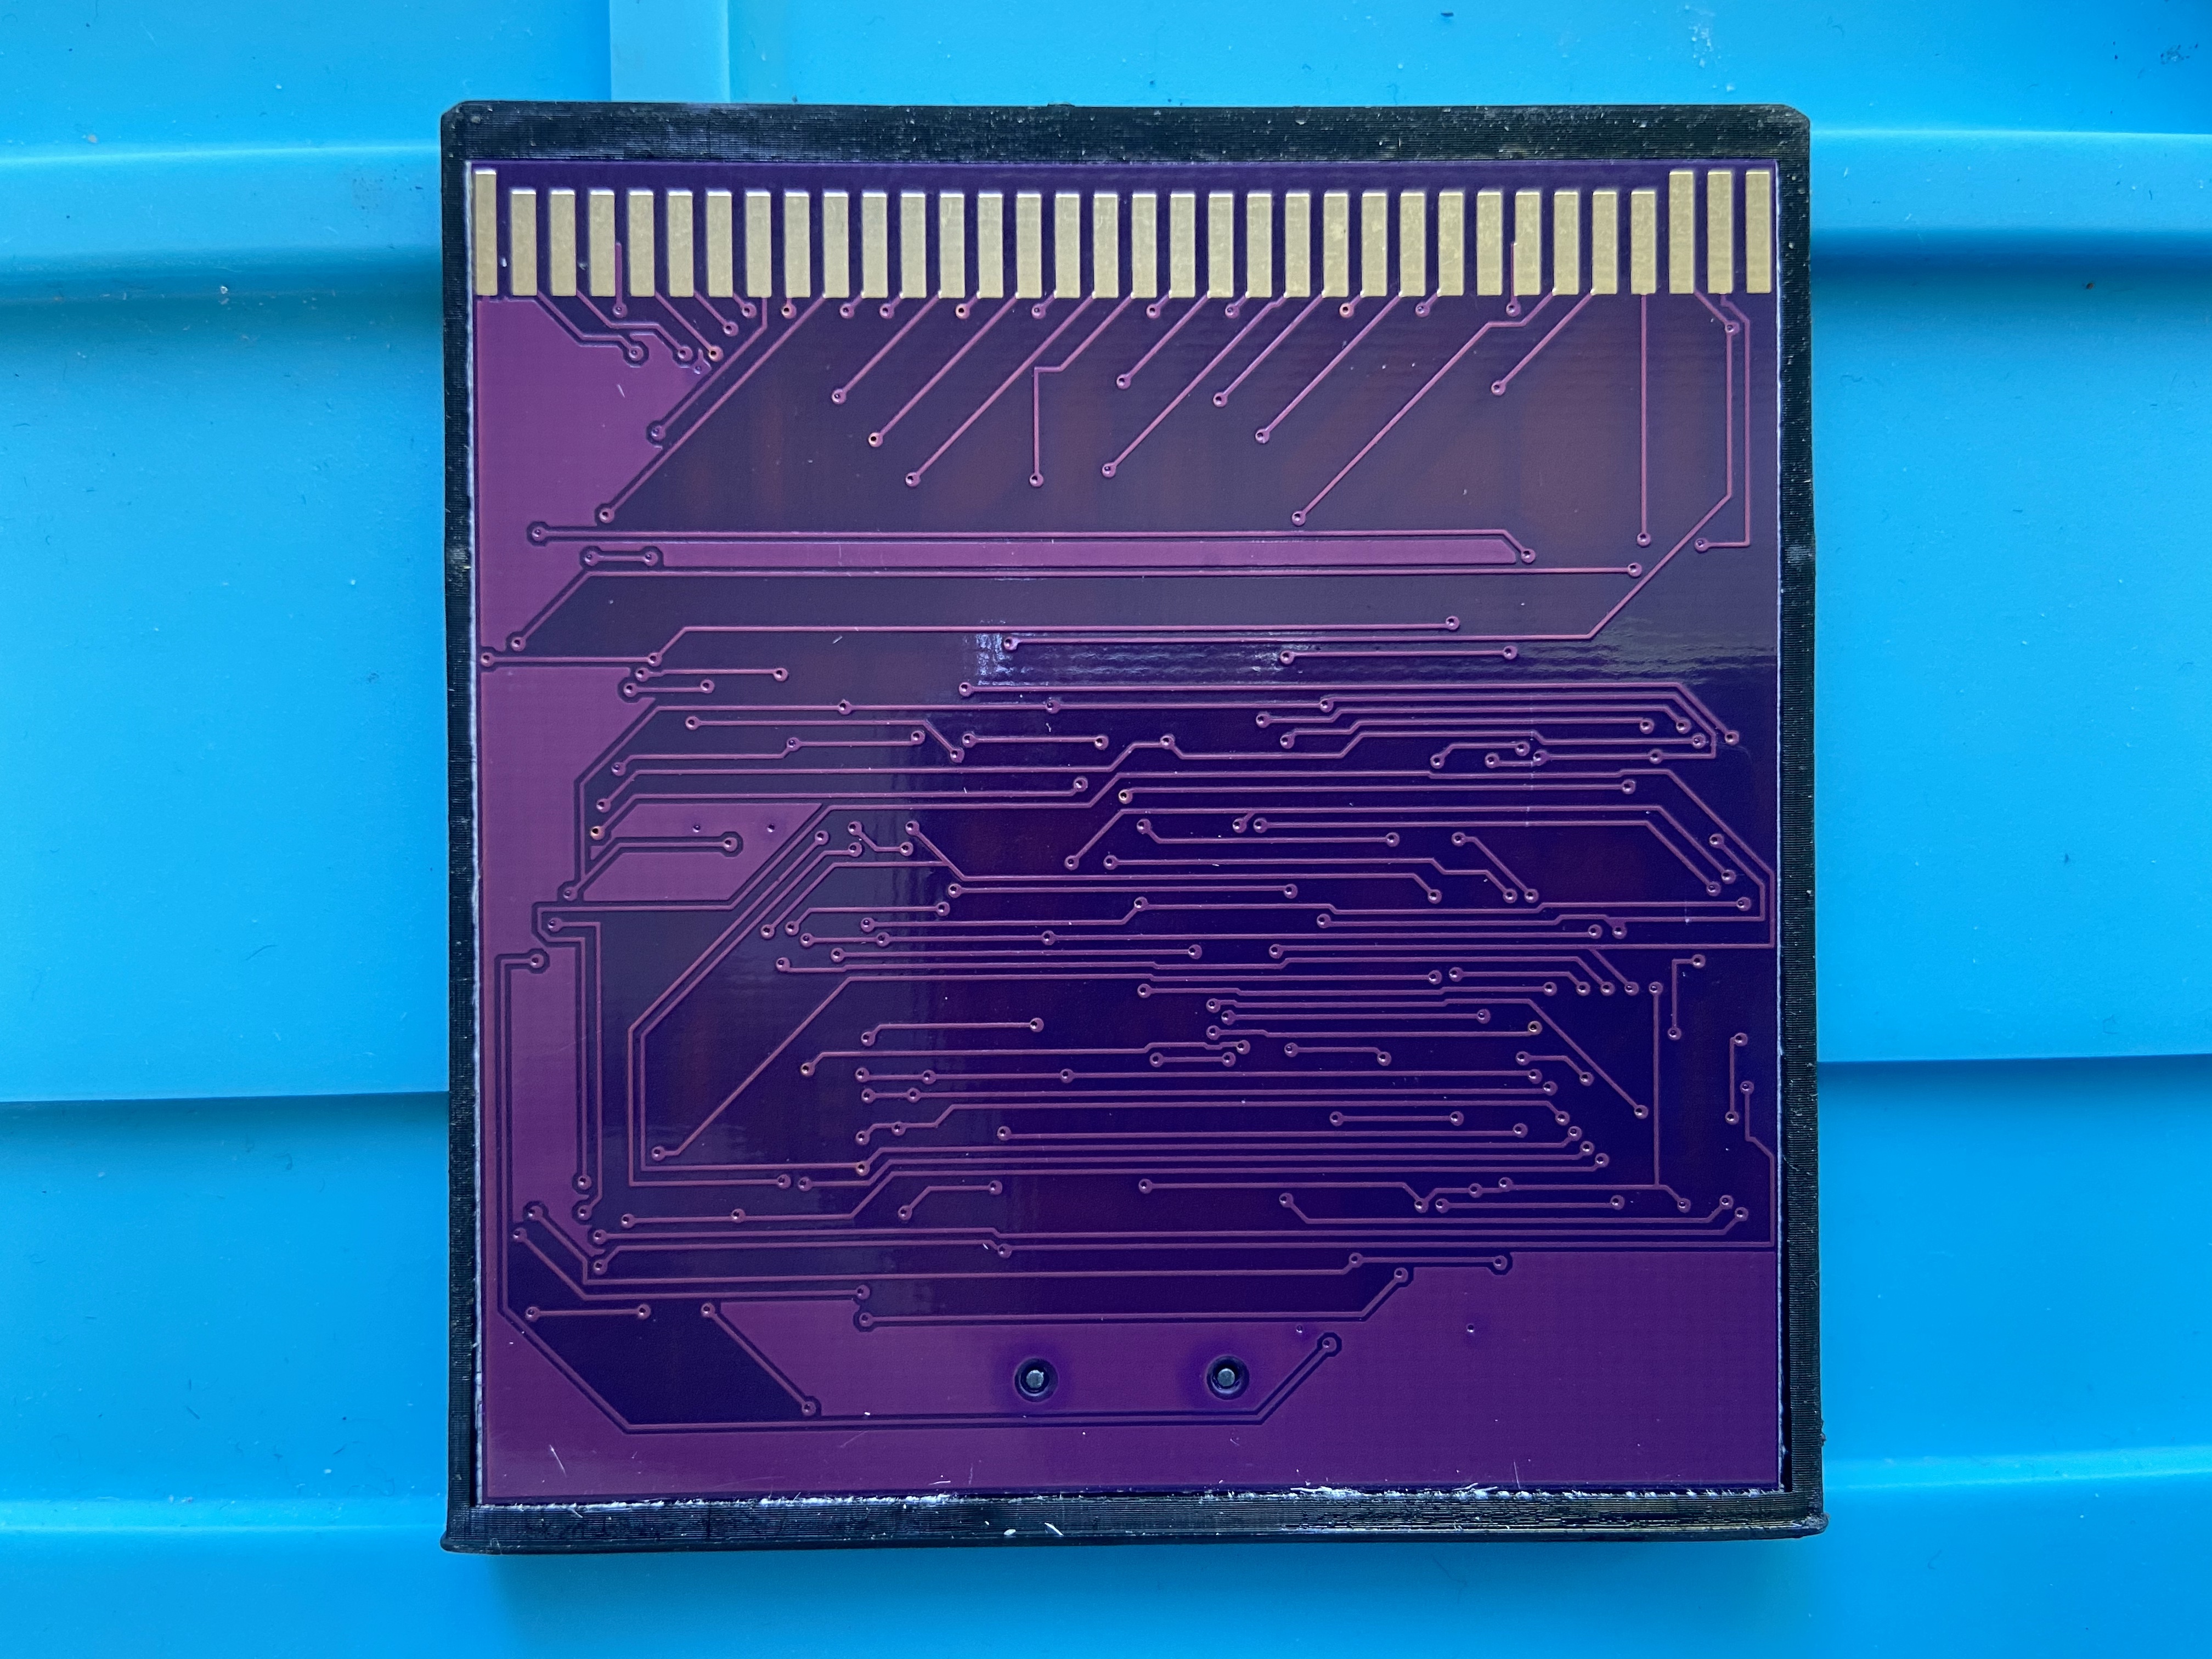 BennVenn ElCheapoSD flash cart for Atari Lynx (back)